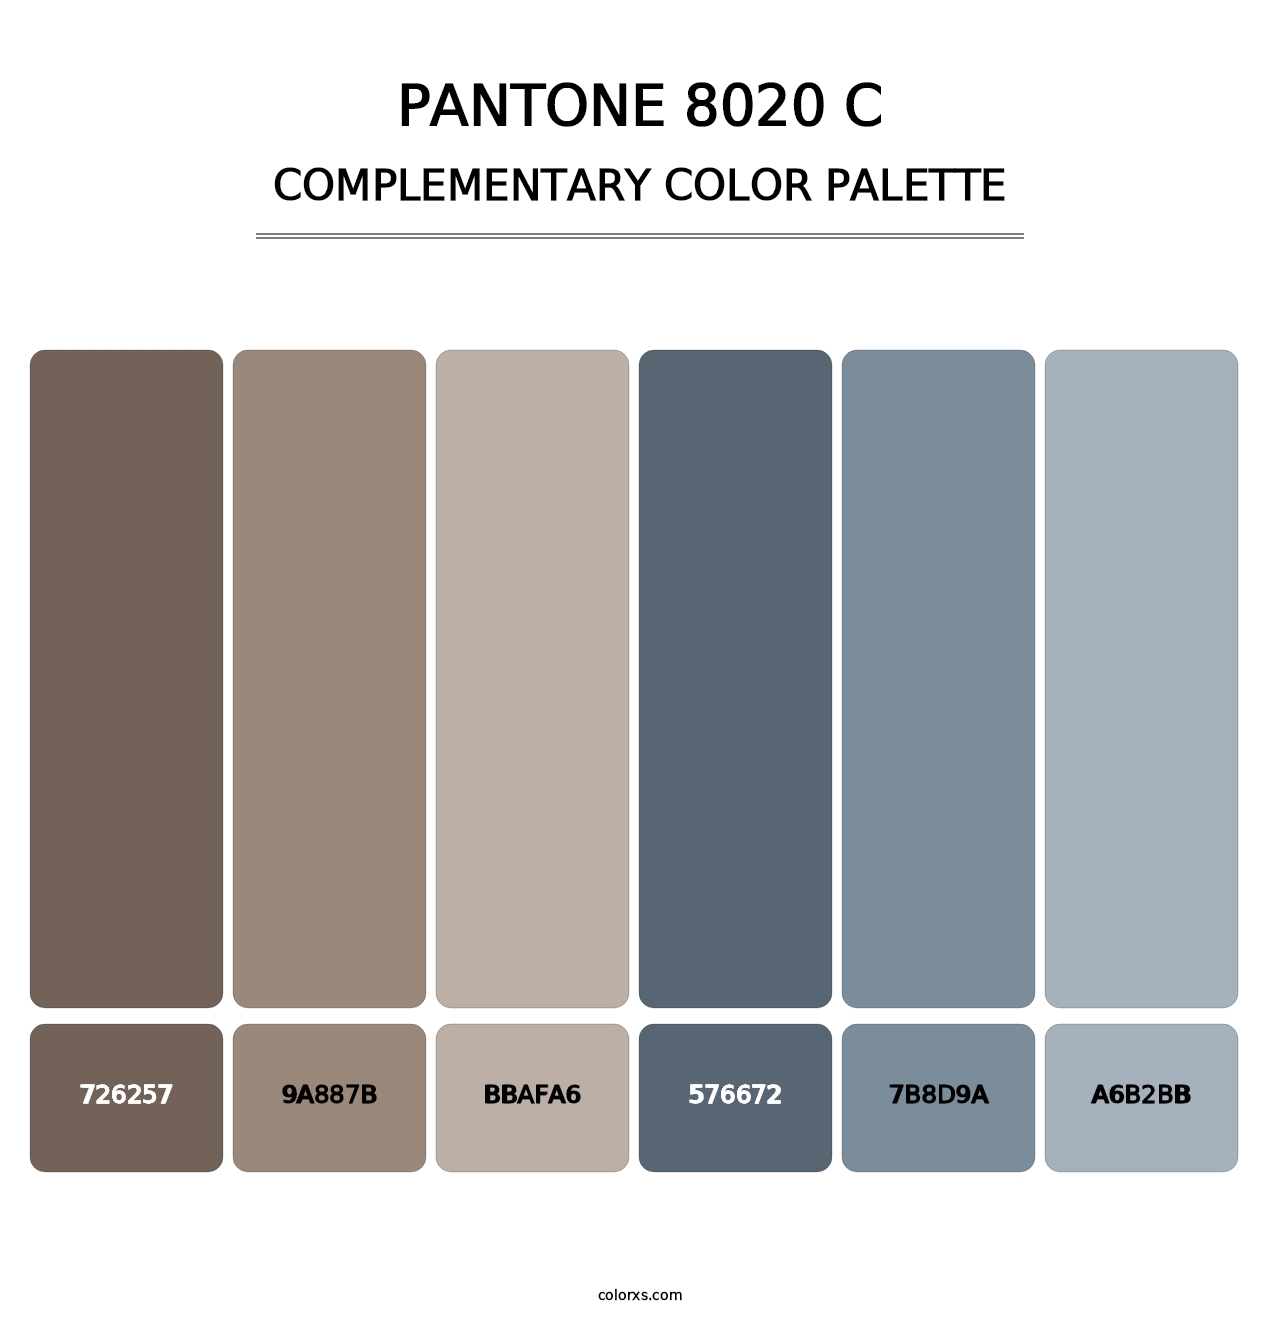 PANTONE 8020 C - Complementary Color Palette